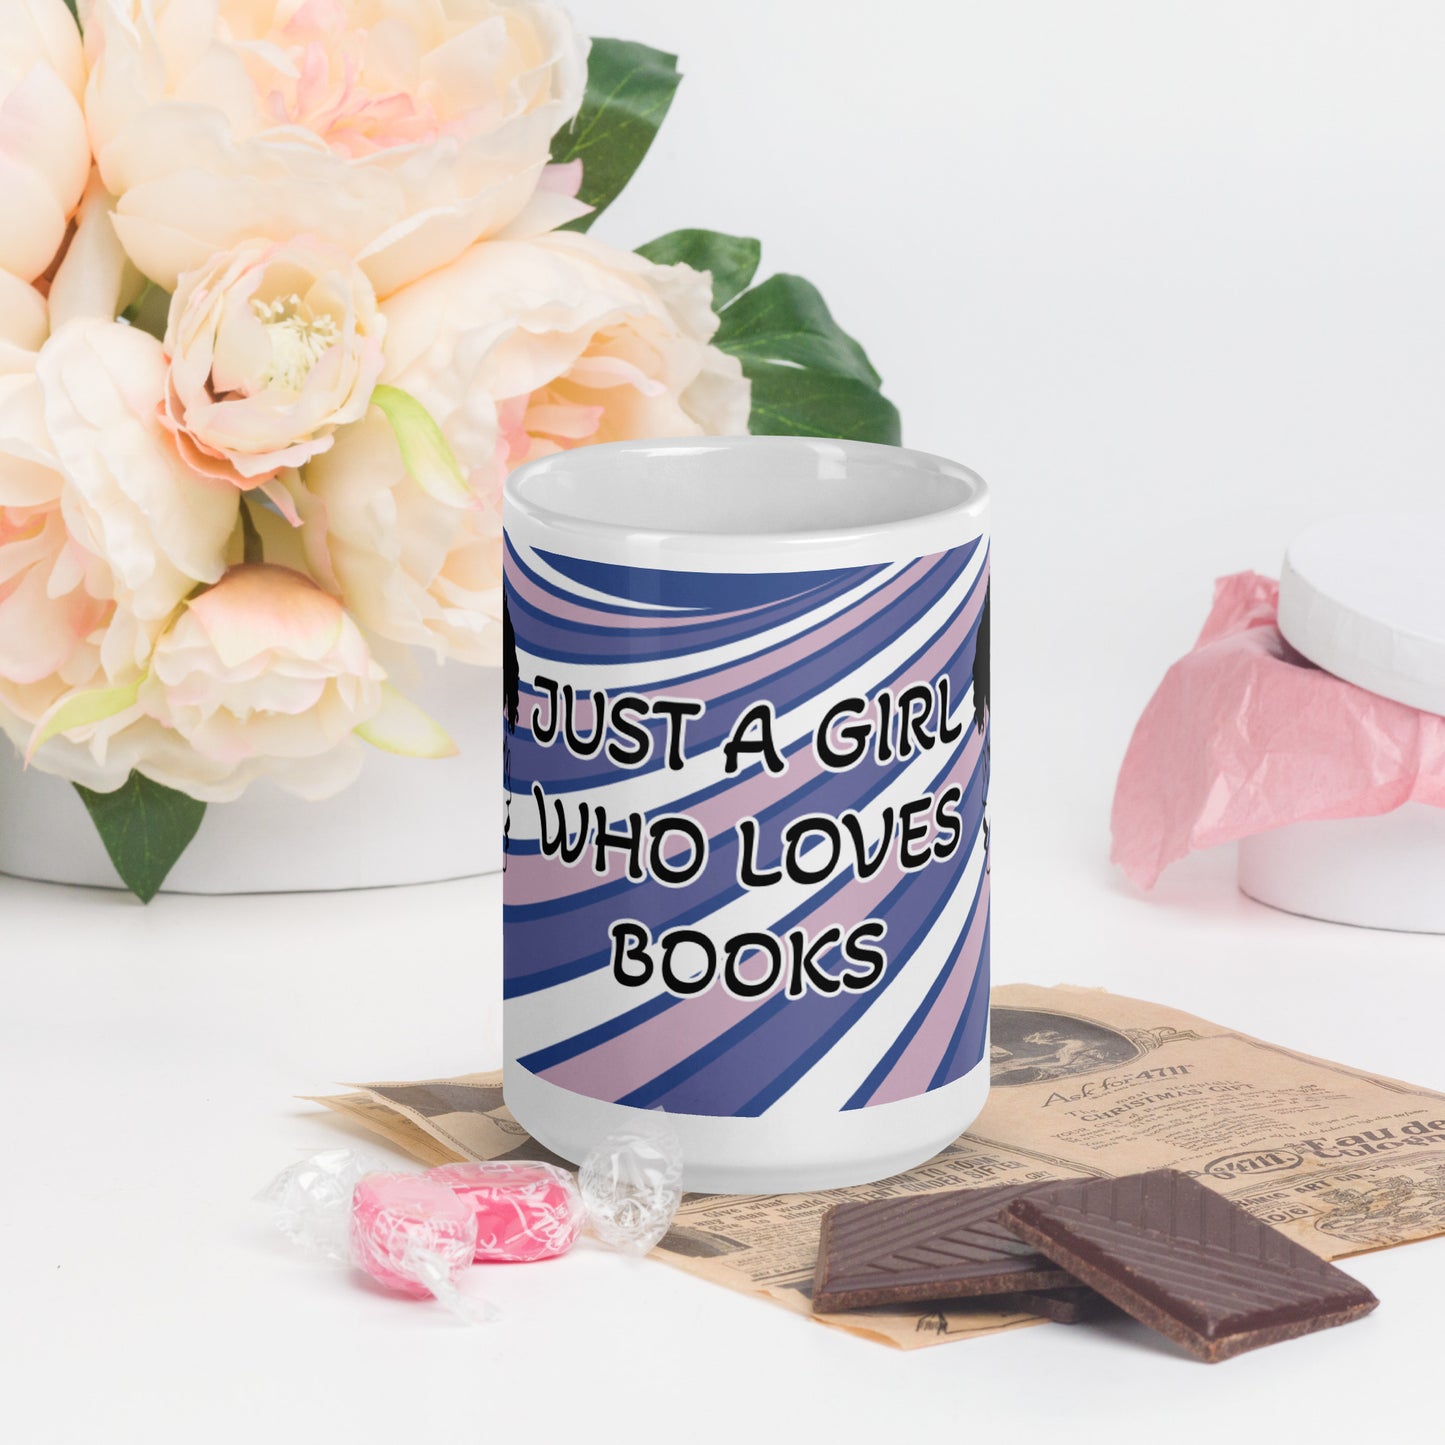 JUST A GIRL WHO LOVES BOOKS- White glossy mug